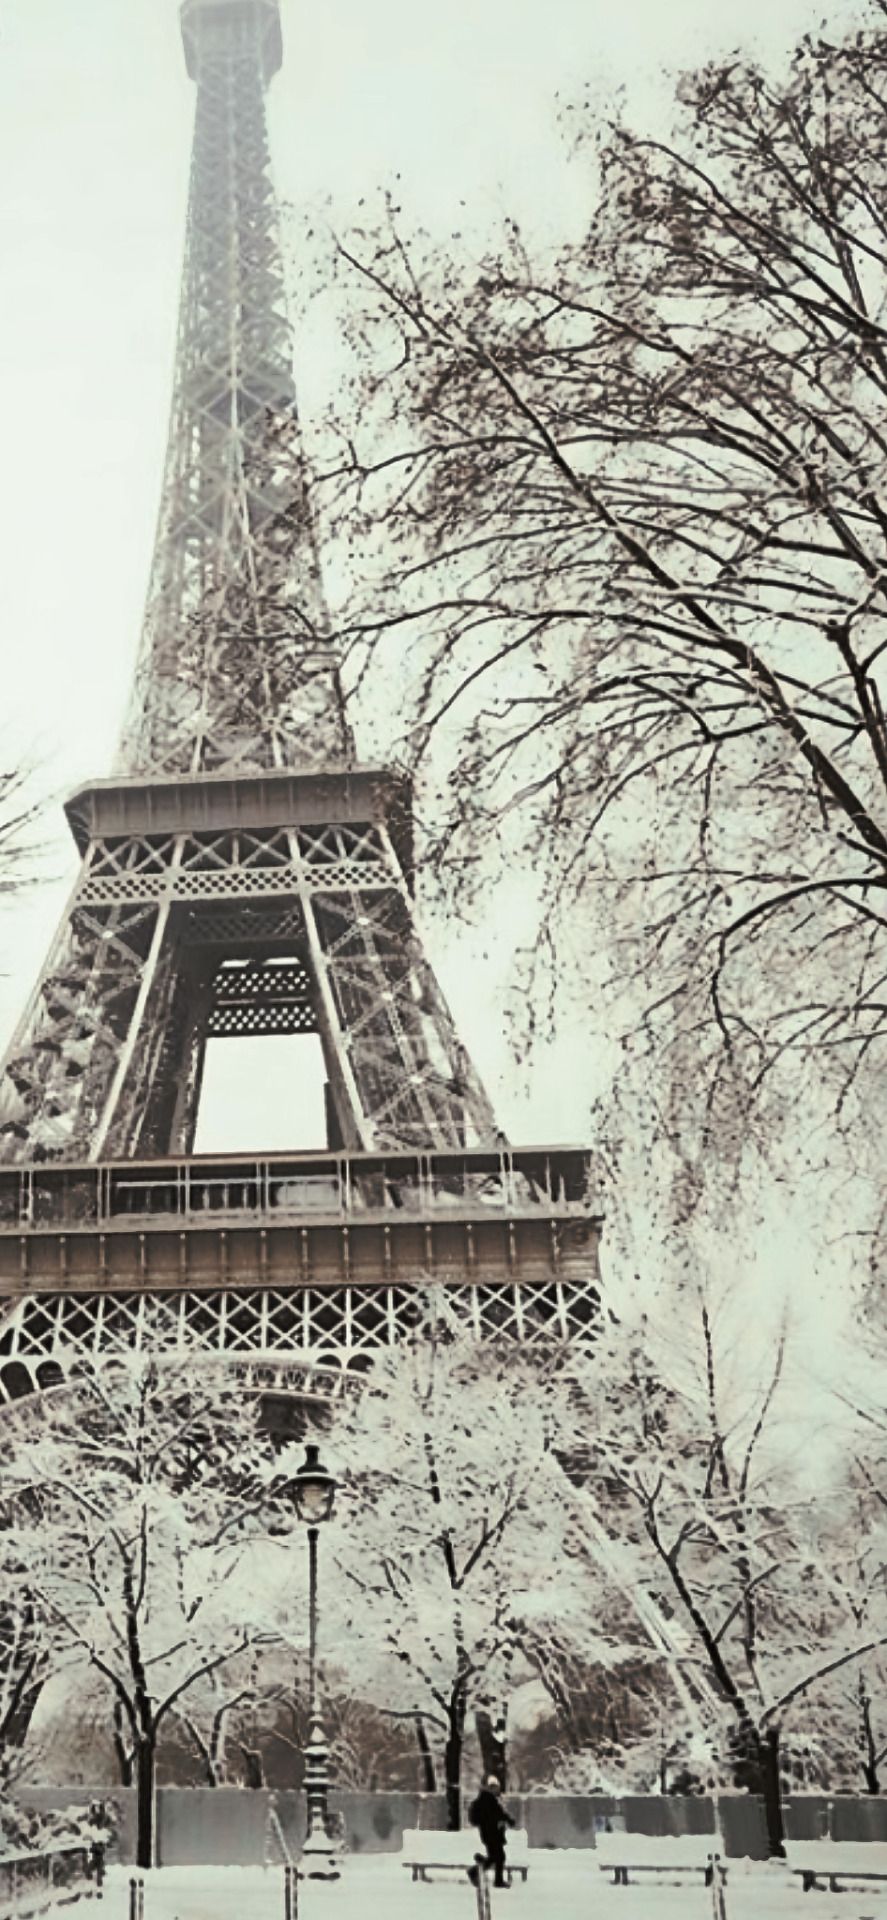 A black and white photo of the Eiffel Tower in Paris. - Paris, Eiffel Tower